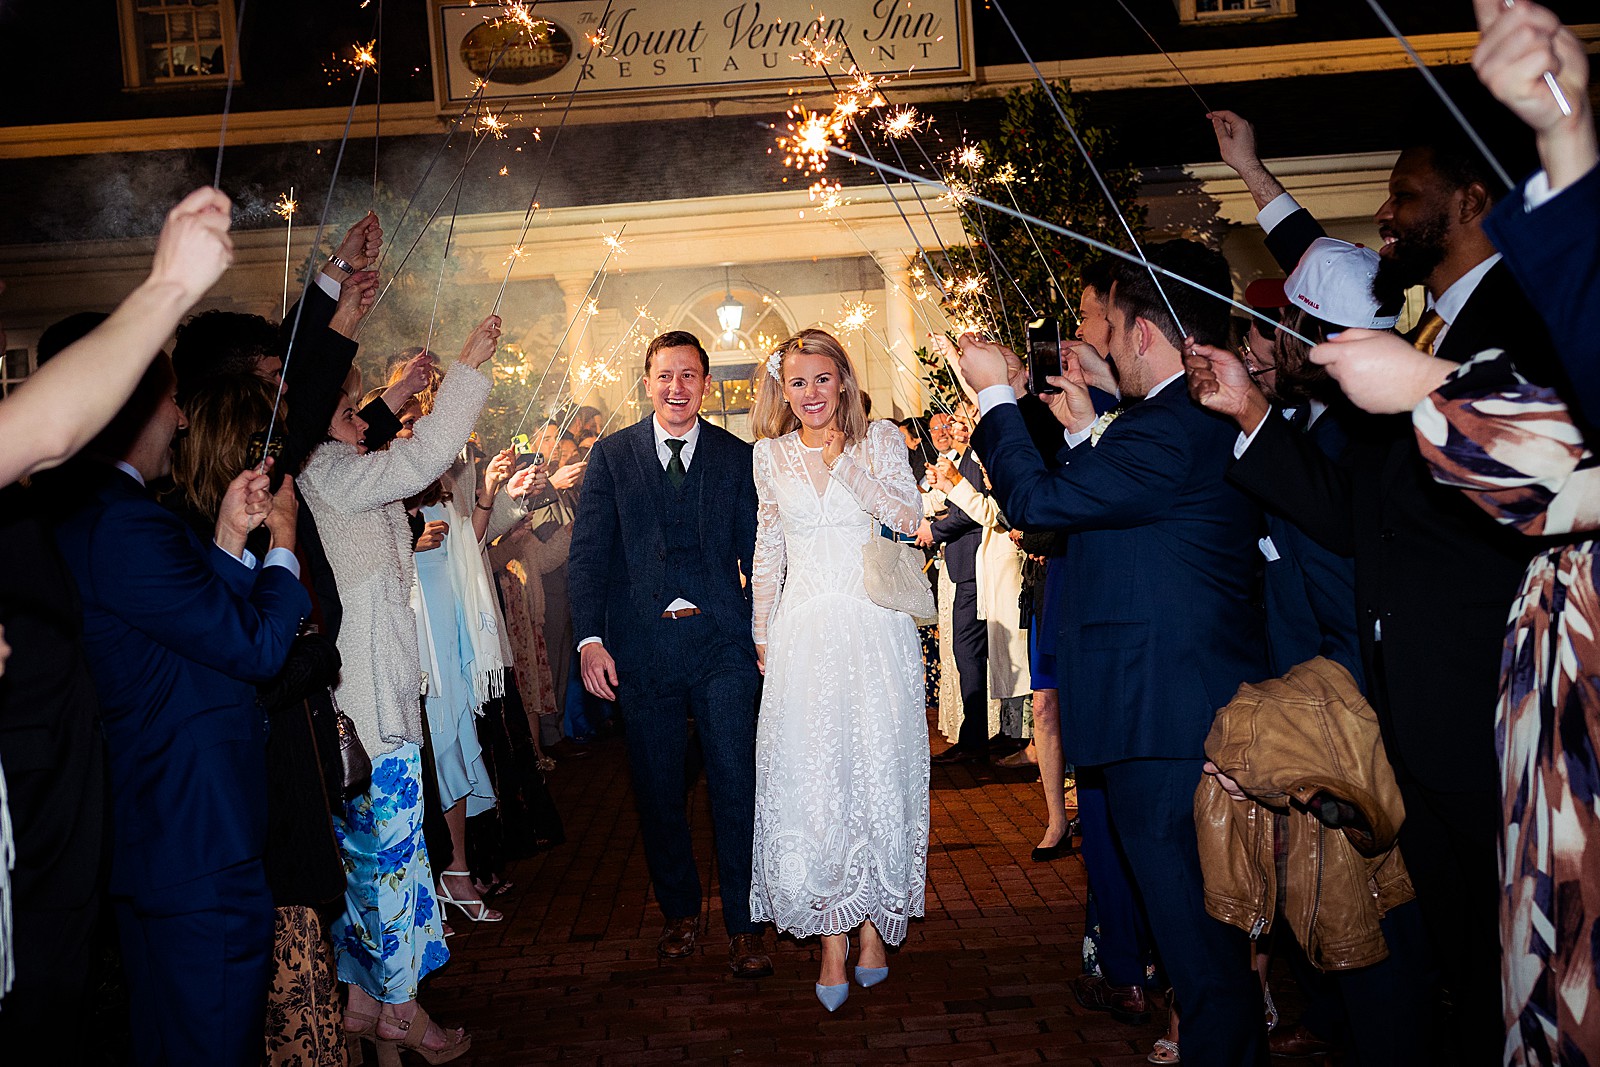 Bride and groom walk through a sparkler exit to end the night at their rainy Mount Vernon Inn Restaurant wedding.